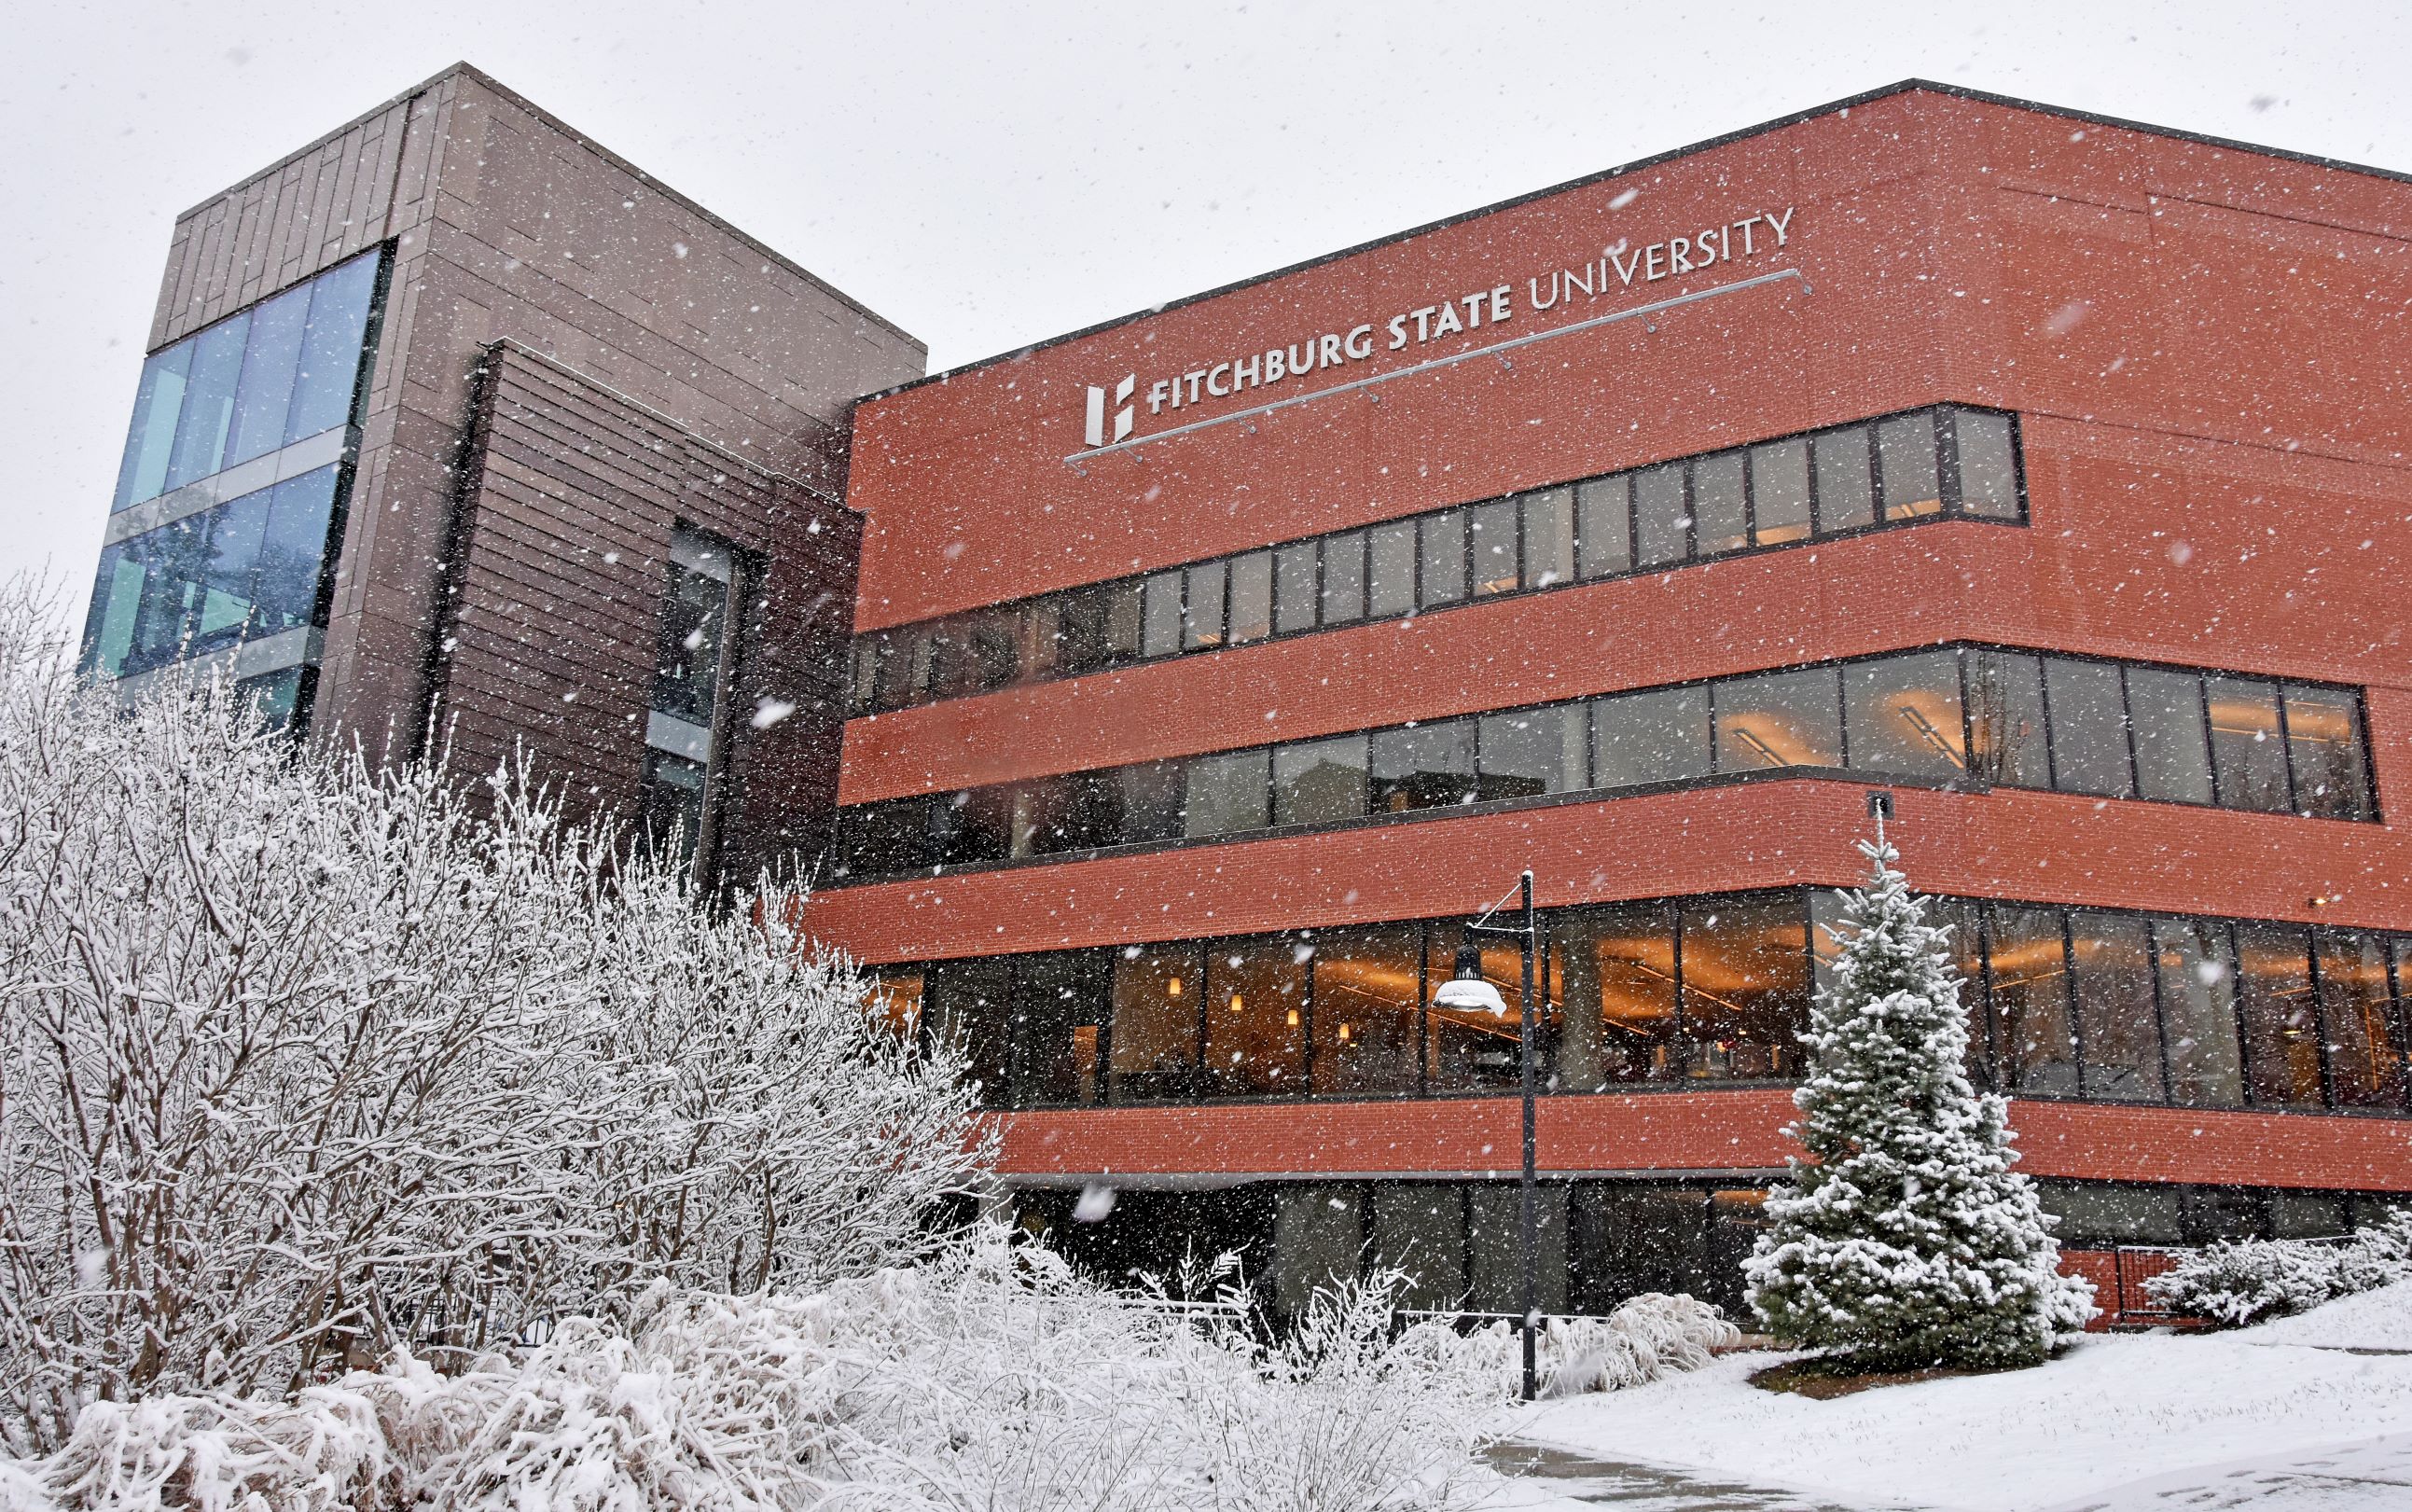 February Snow Makes Campus a Winter Wonderland